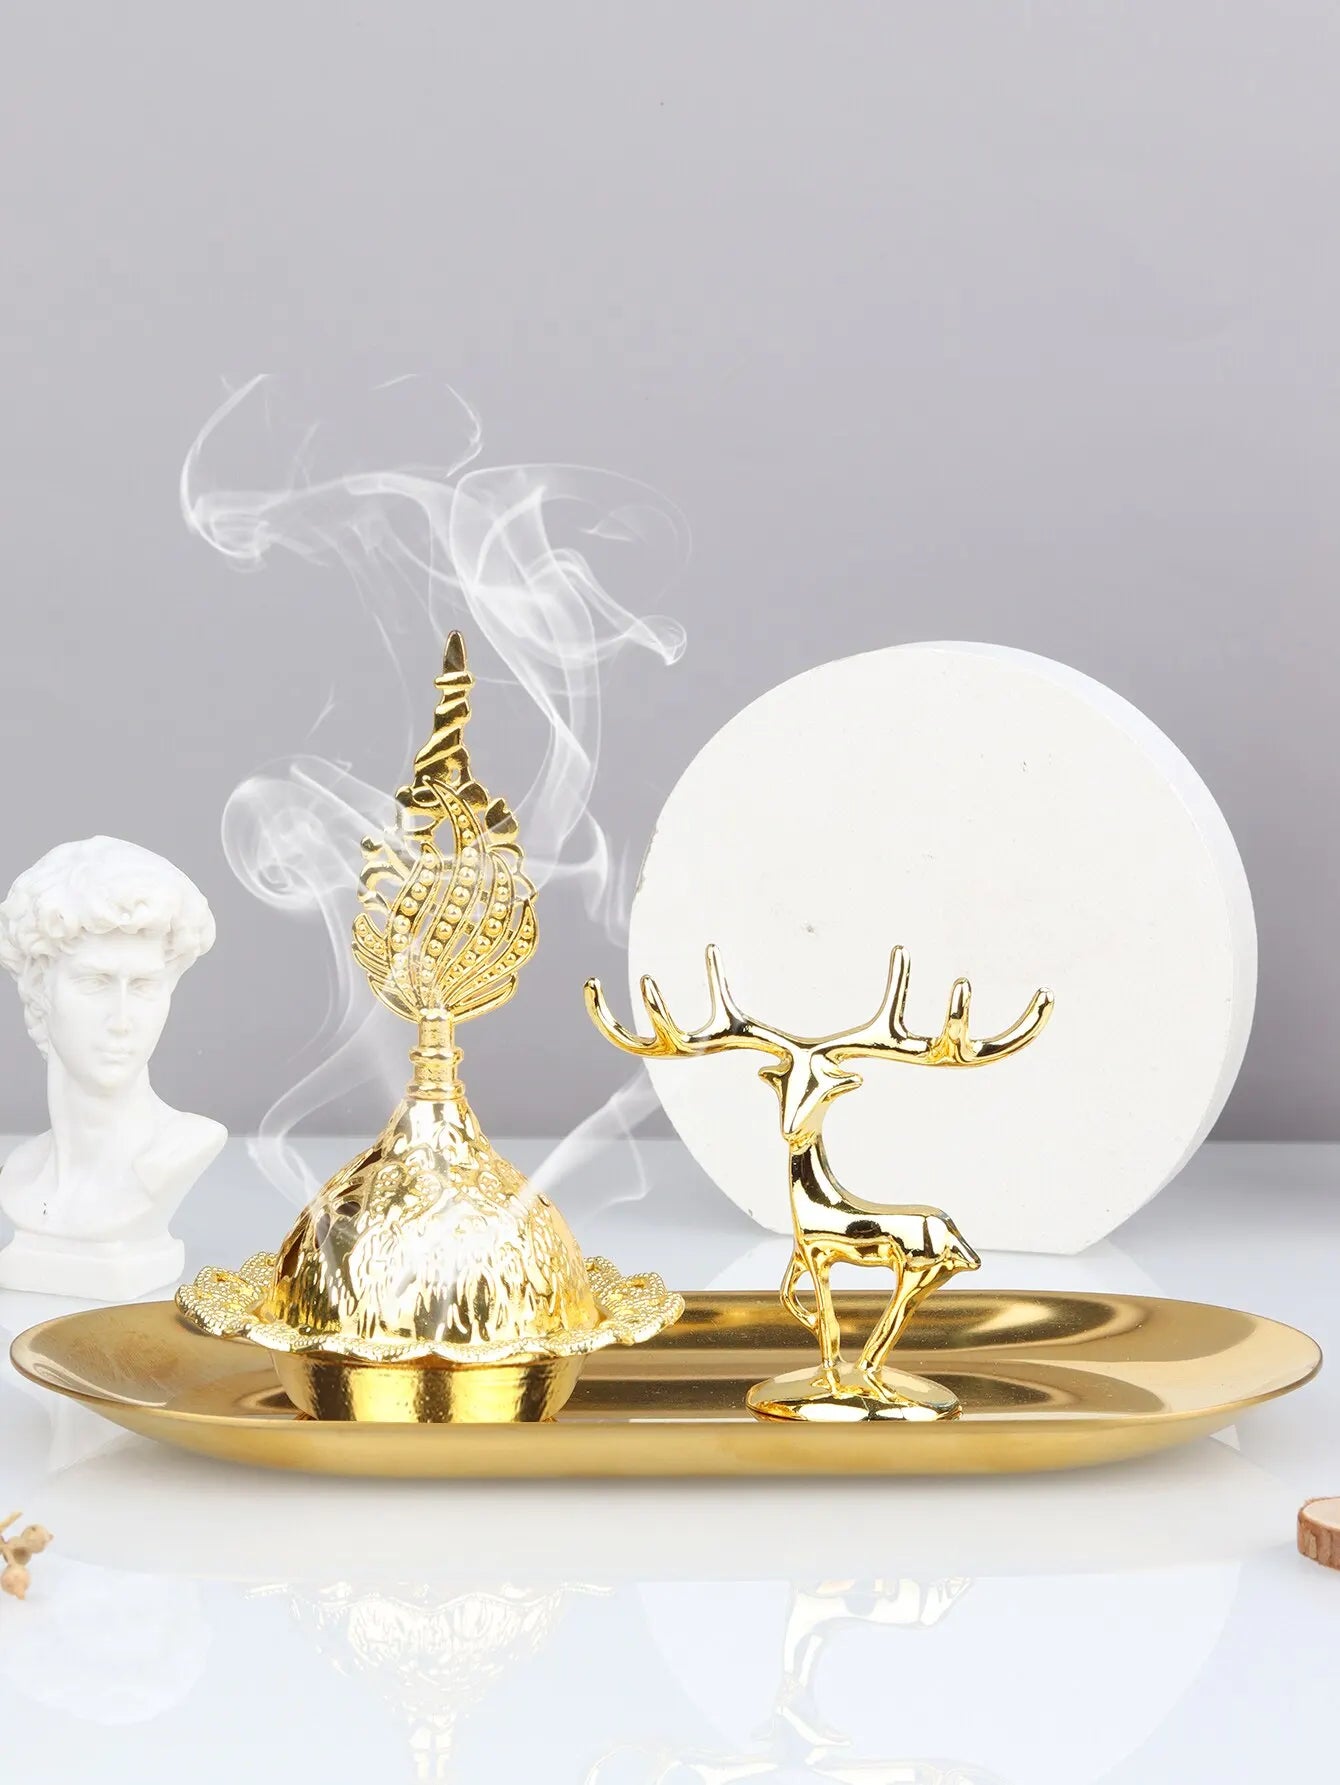 Steven Store™ Golden Handheld Incense Burner Set: Luxurious and elegant incense burner for a serene aromatherapy experience